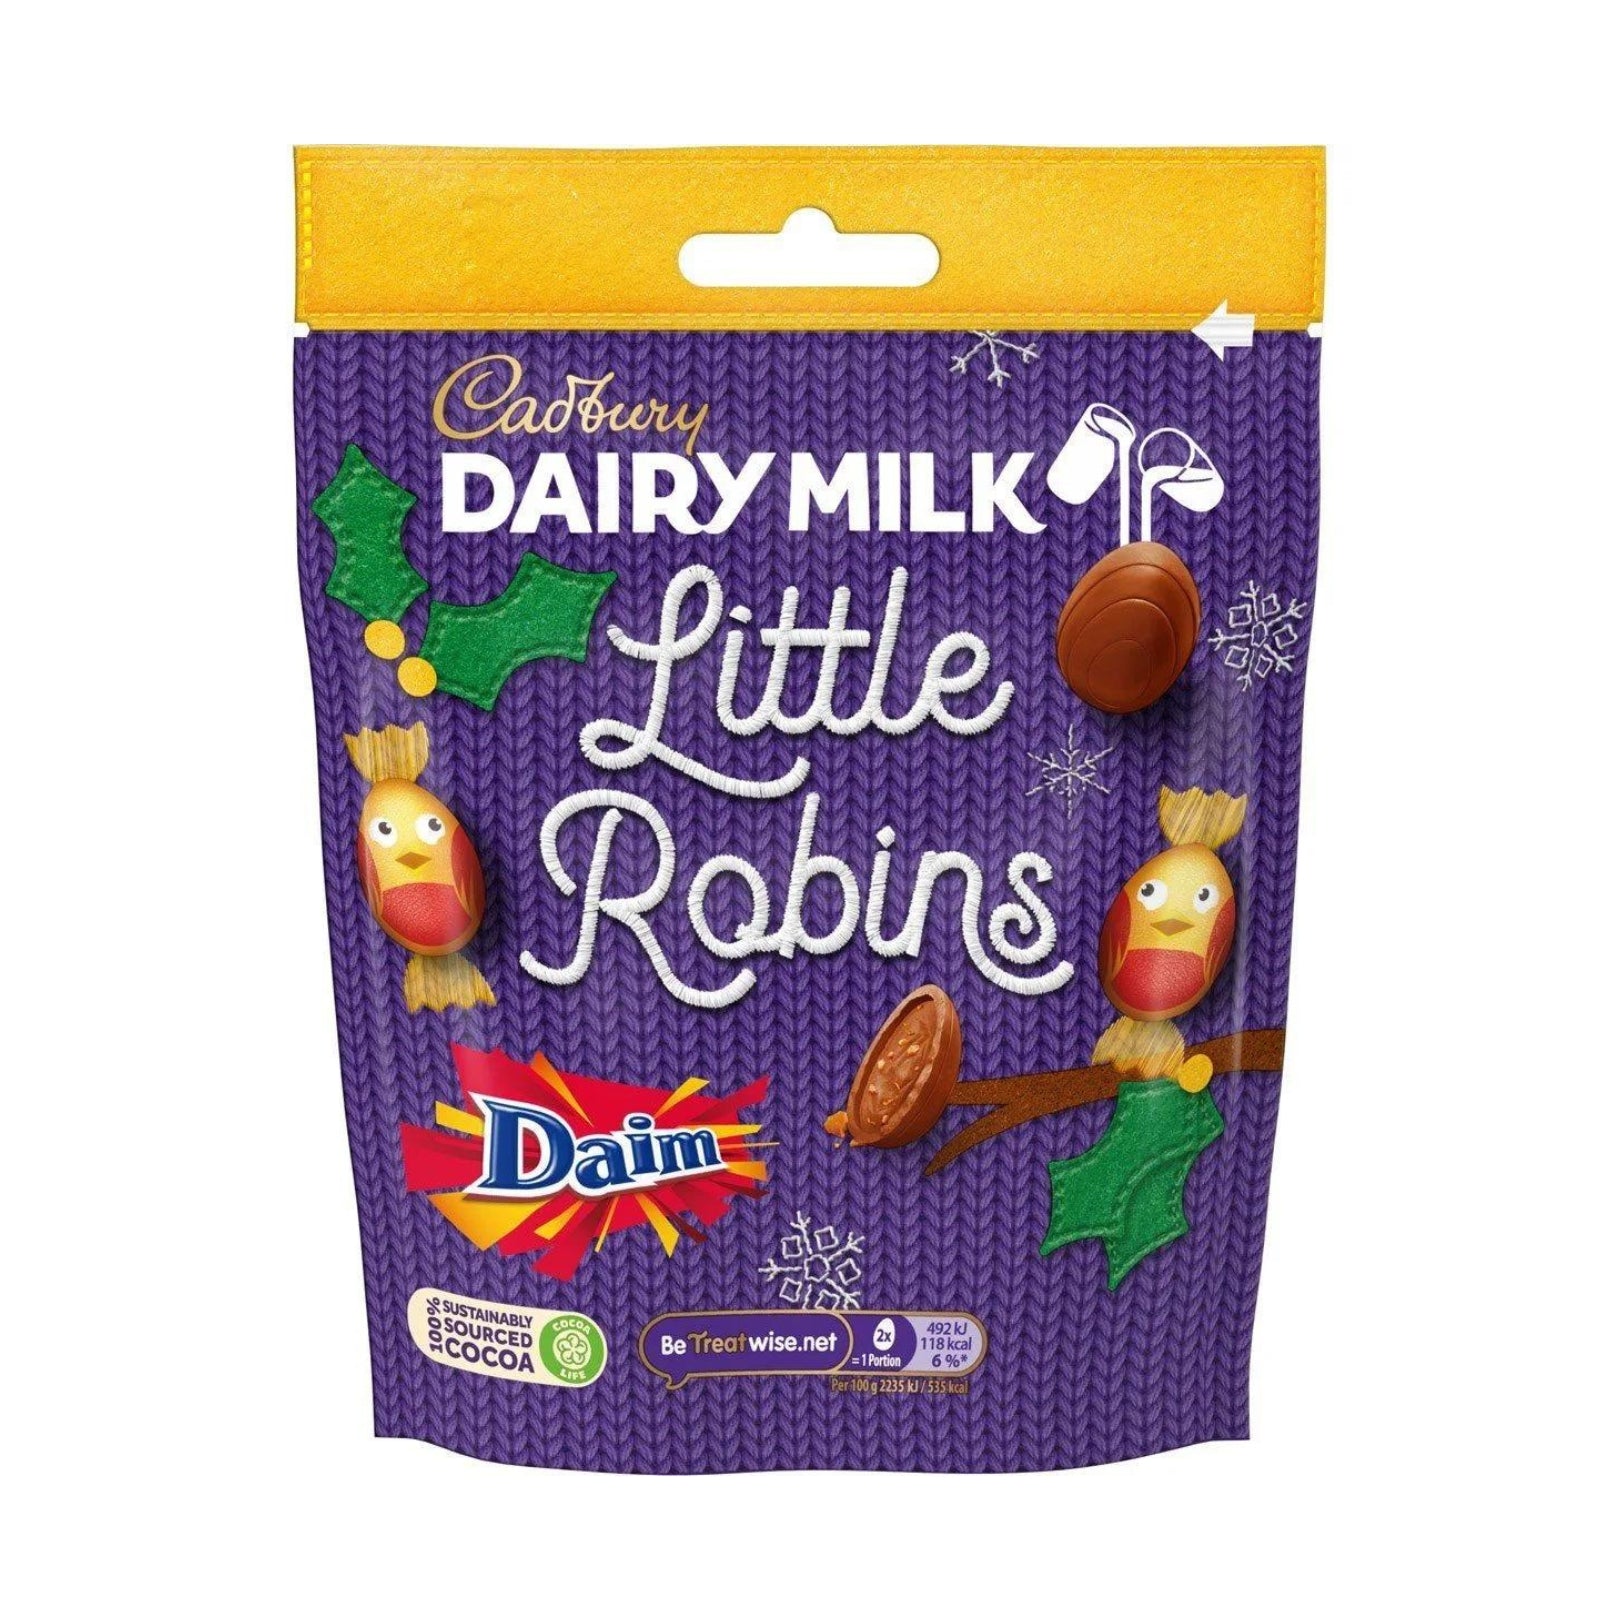 Cadbury Dairy Milk Daim Little Robbins 77g